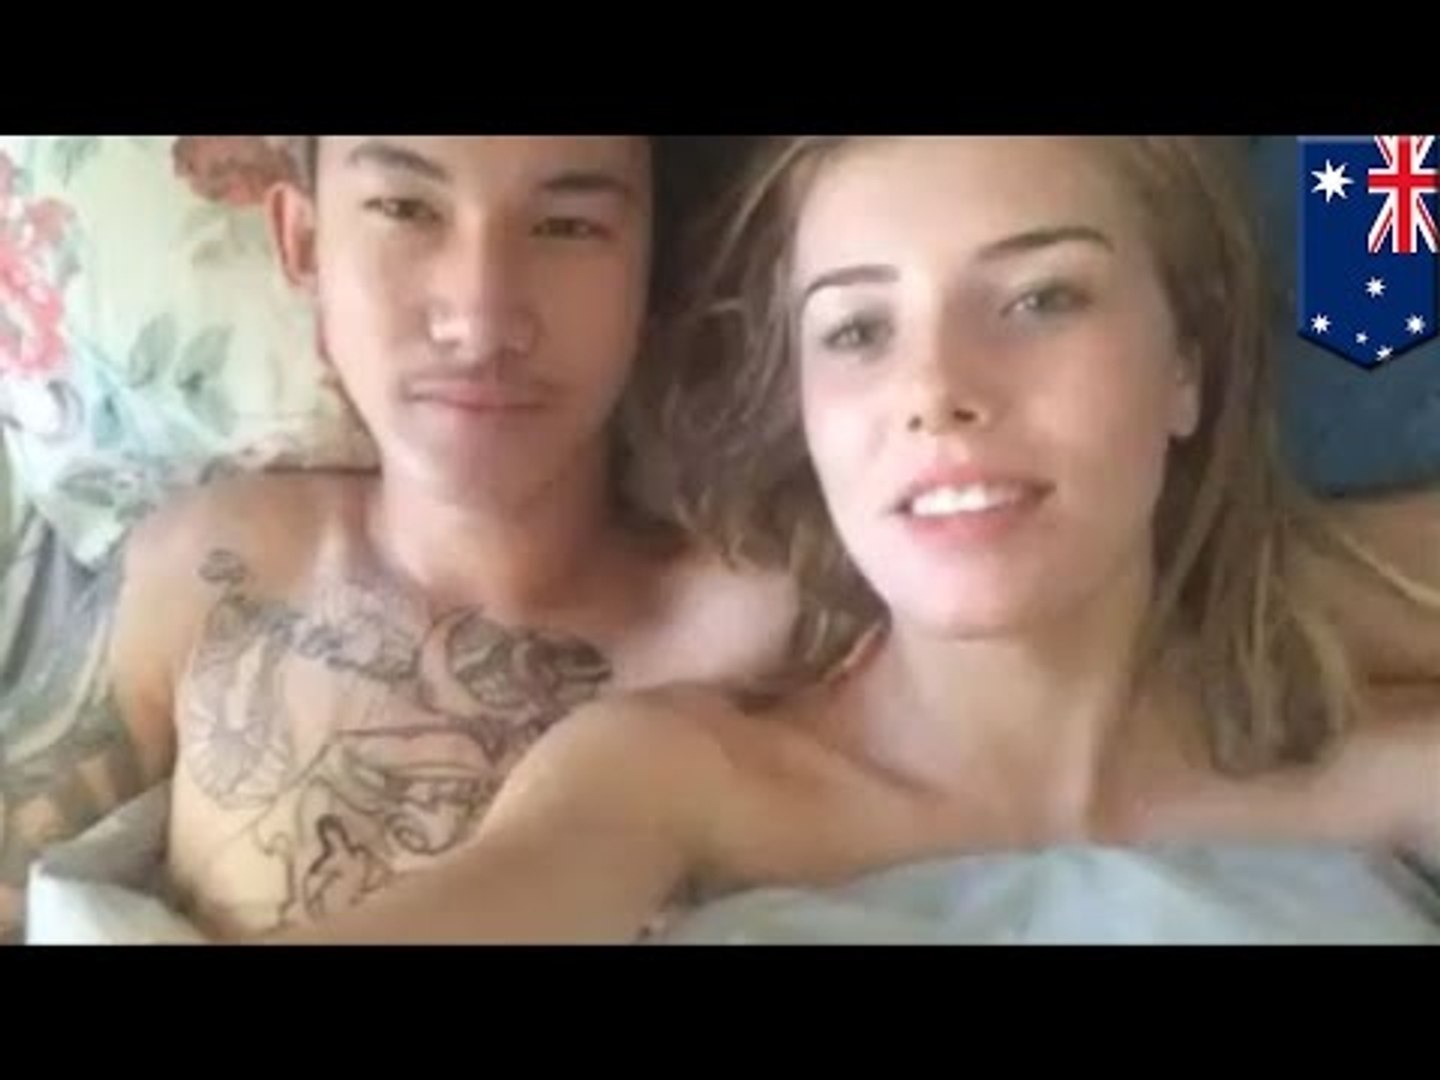 Post-sex selfie Aussie babe gets revenge on cheating ex after posting video online - TomoNews